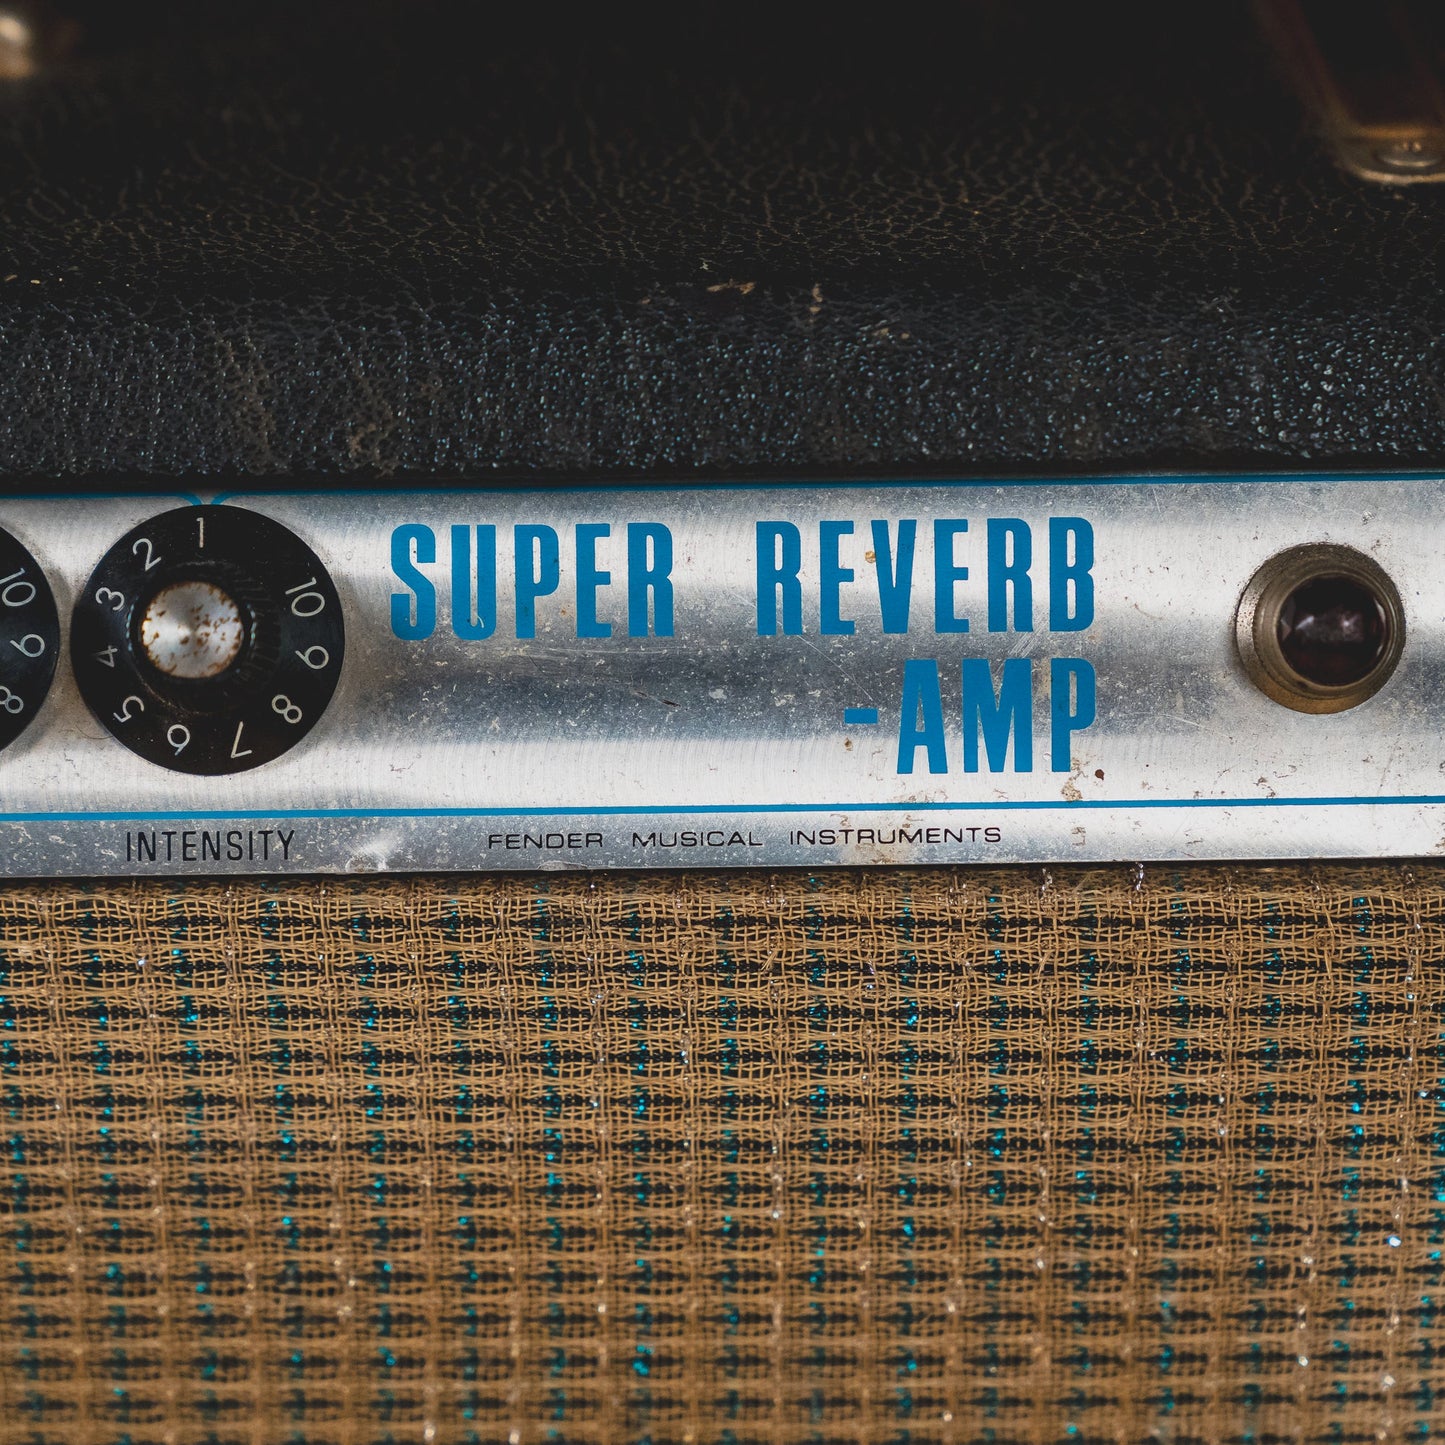 1970 Fender Super Reverb Combo Guitar Amplifier - Used